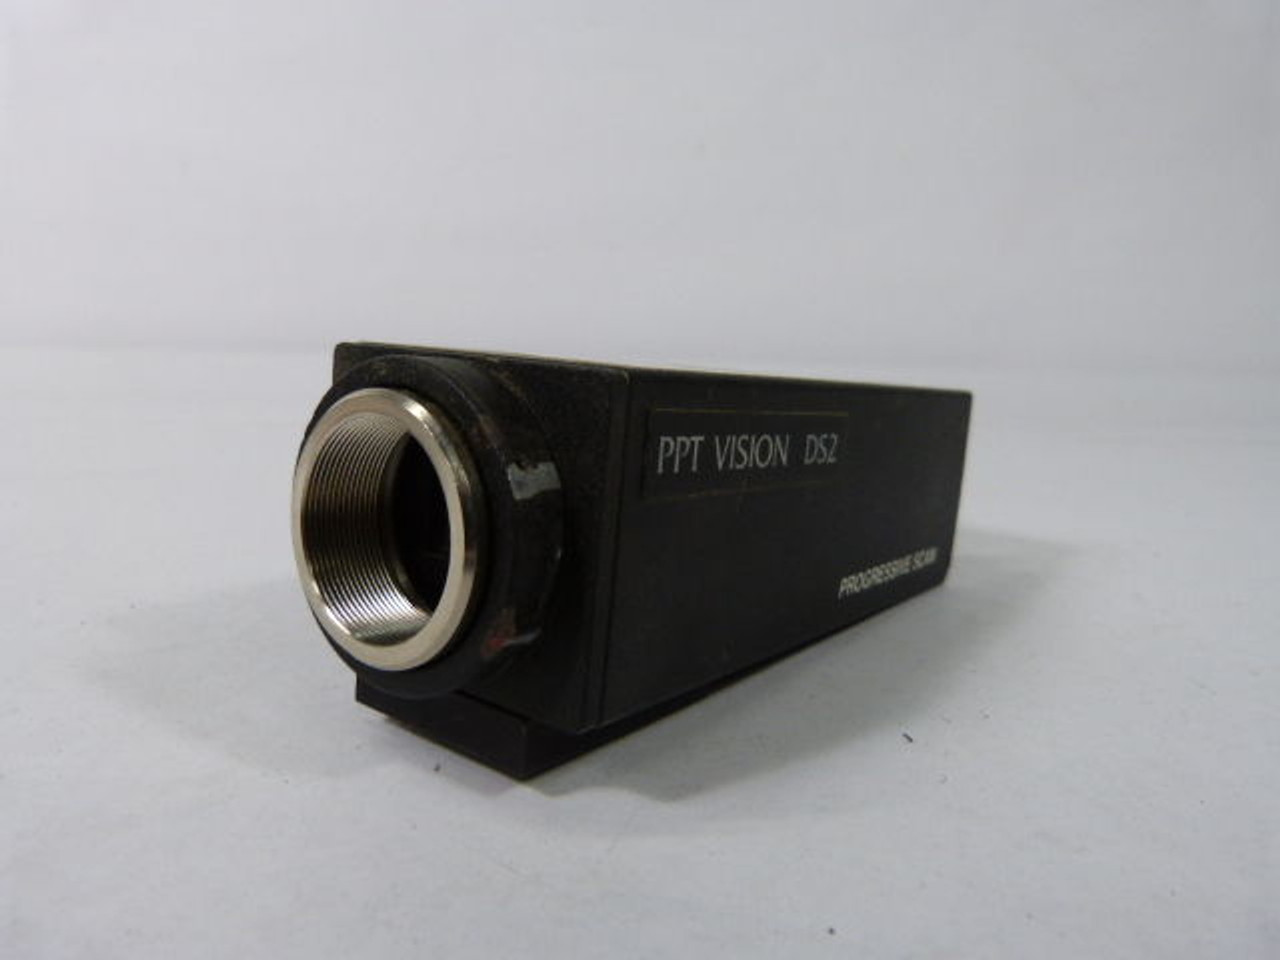 Pulnix DS2 PPT Vision Progressive Scan Camera 10-7371 COSMETIC DAMAGE USED